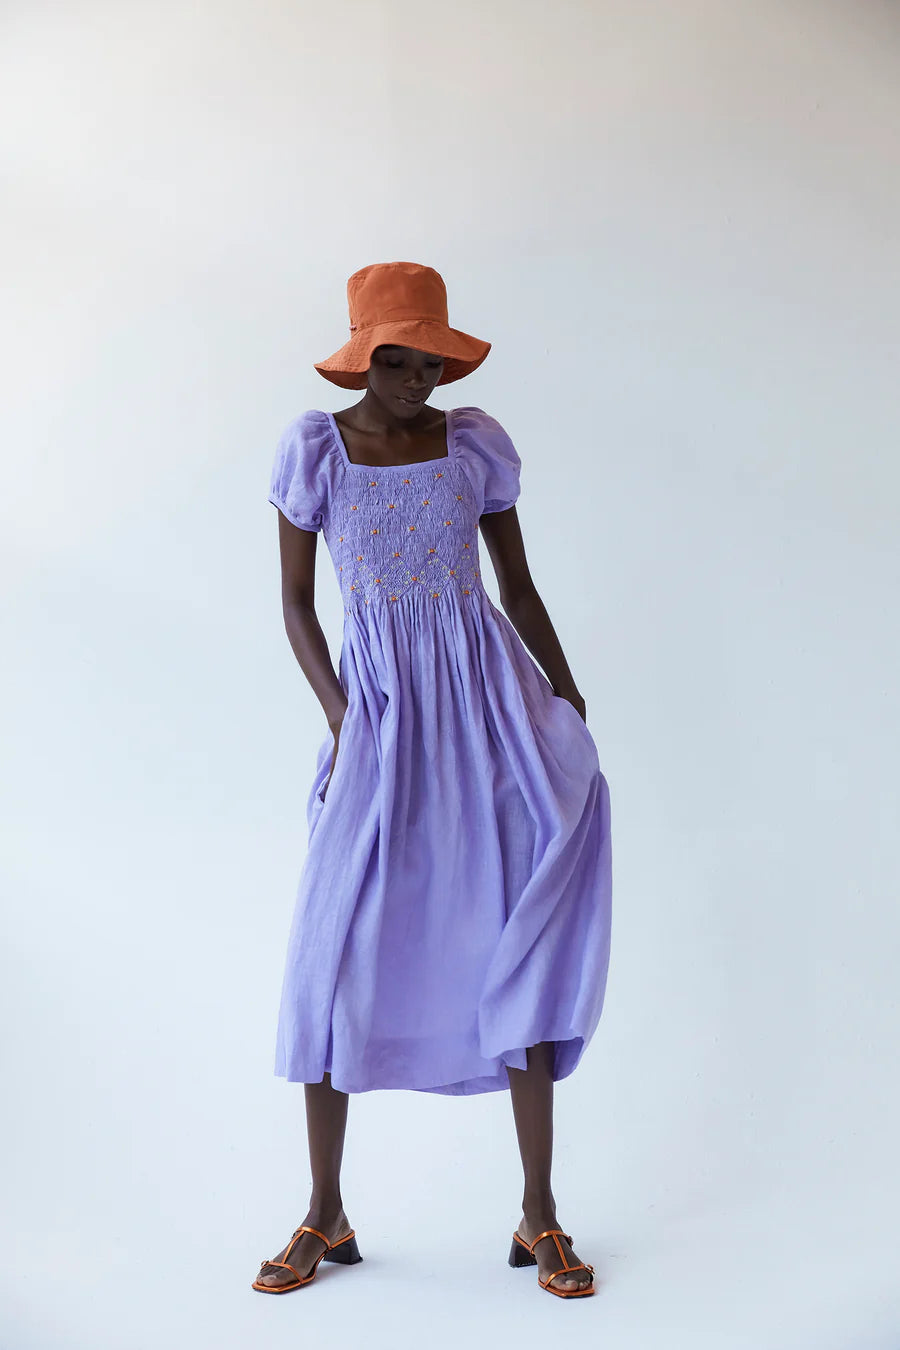 Tach Clothing smocked lilac linen dress Manifesto Woman